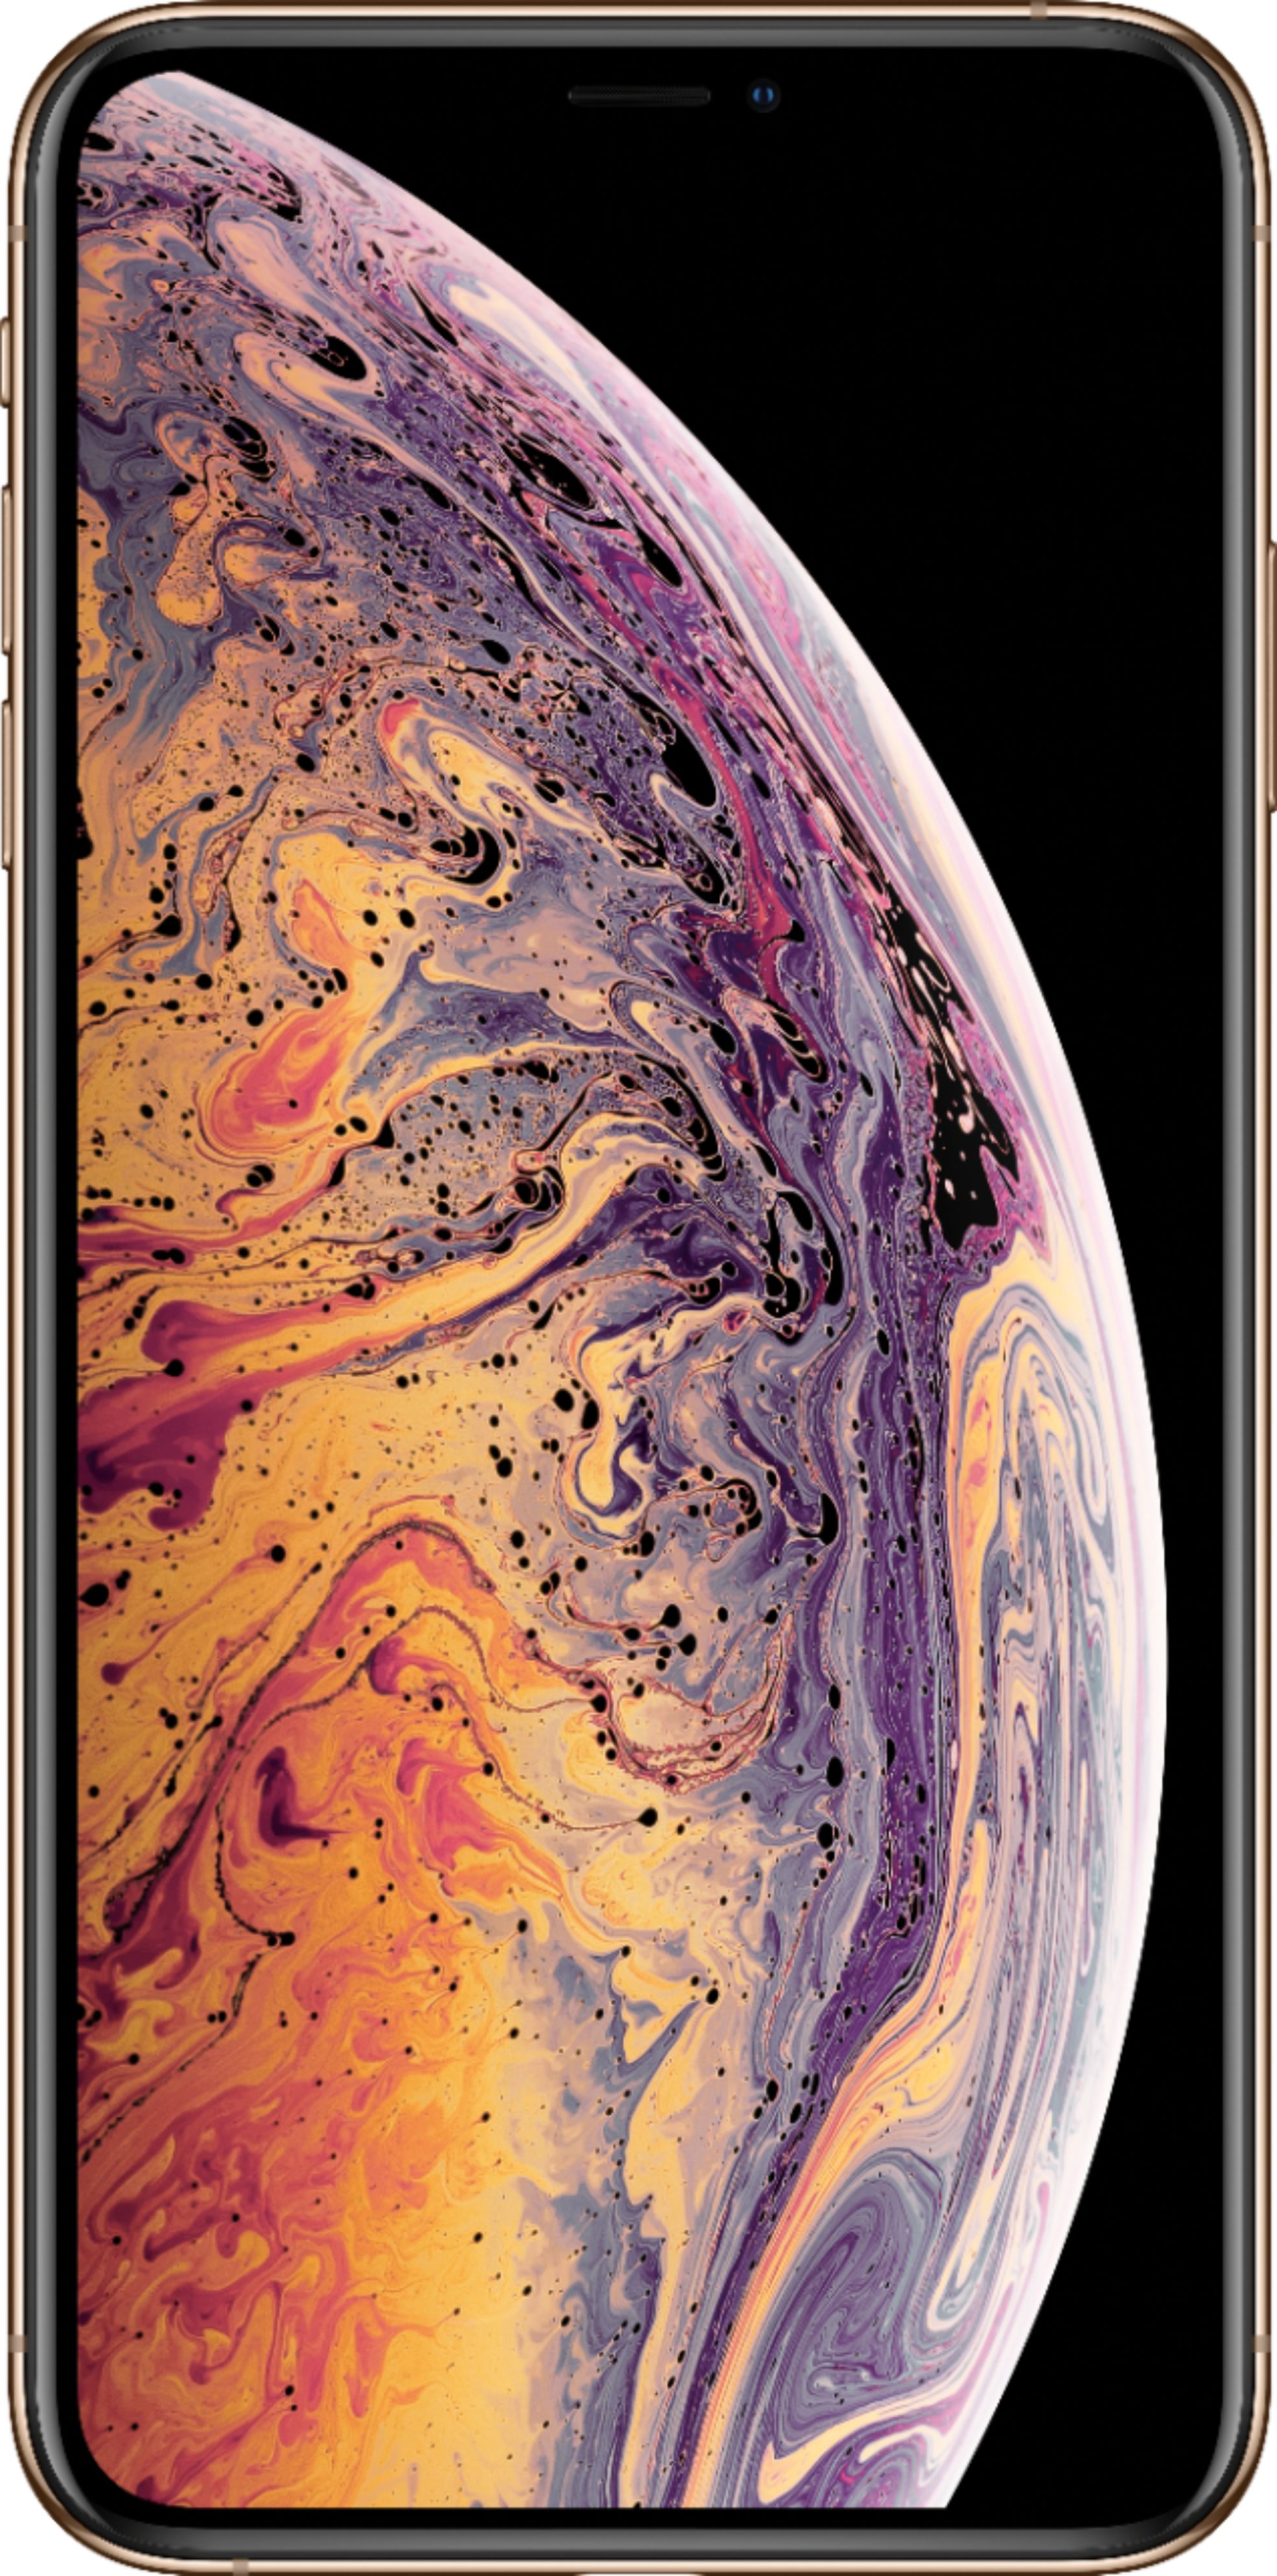 Apple iPhone XS Max 512GB Gold (AT&T) MT5J2LL/A - Best Buy